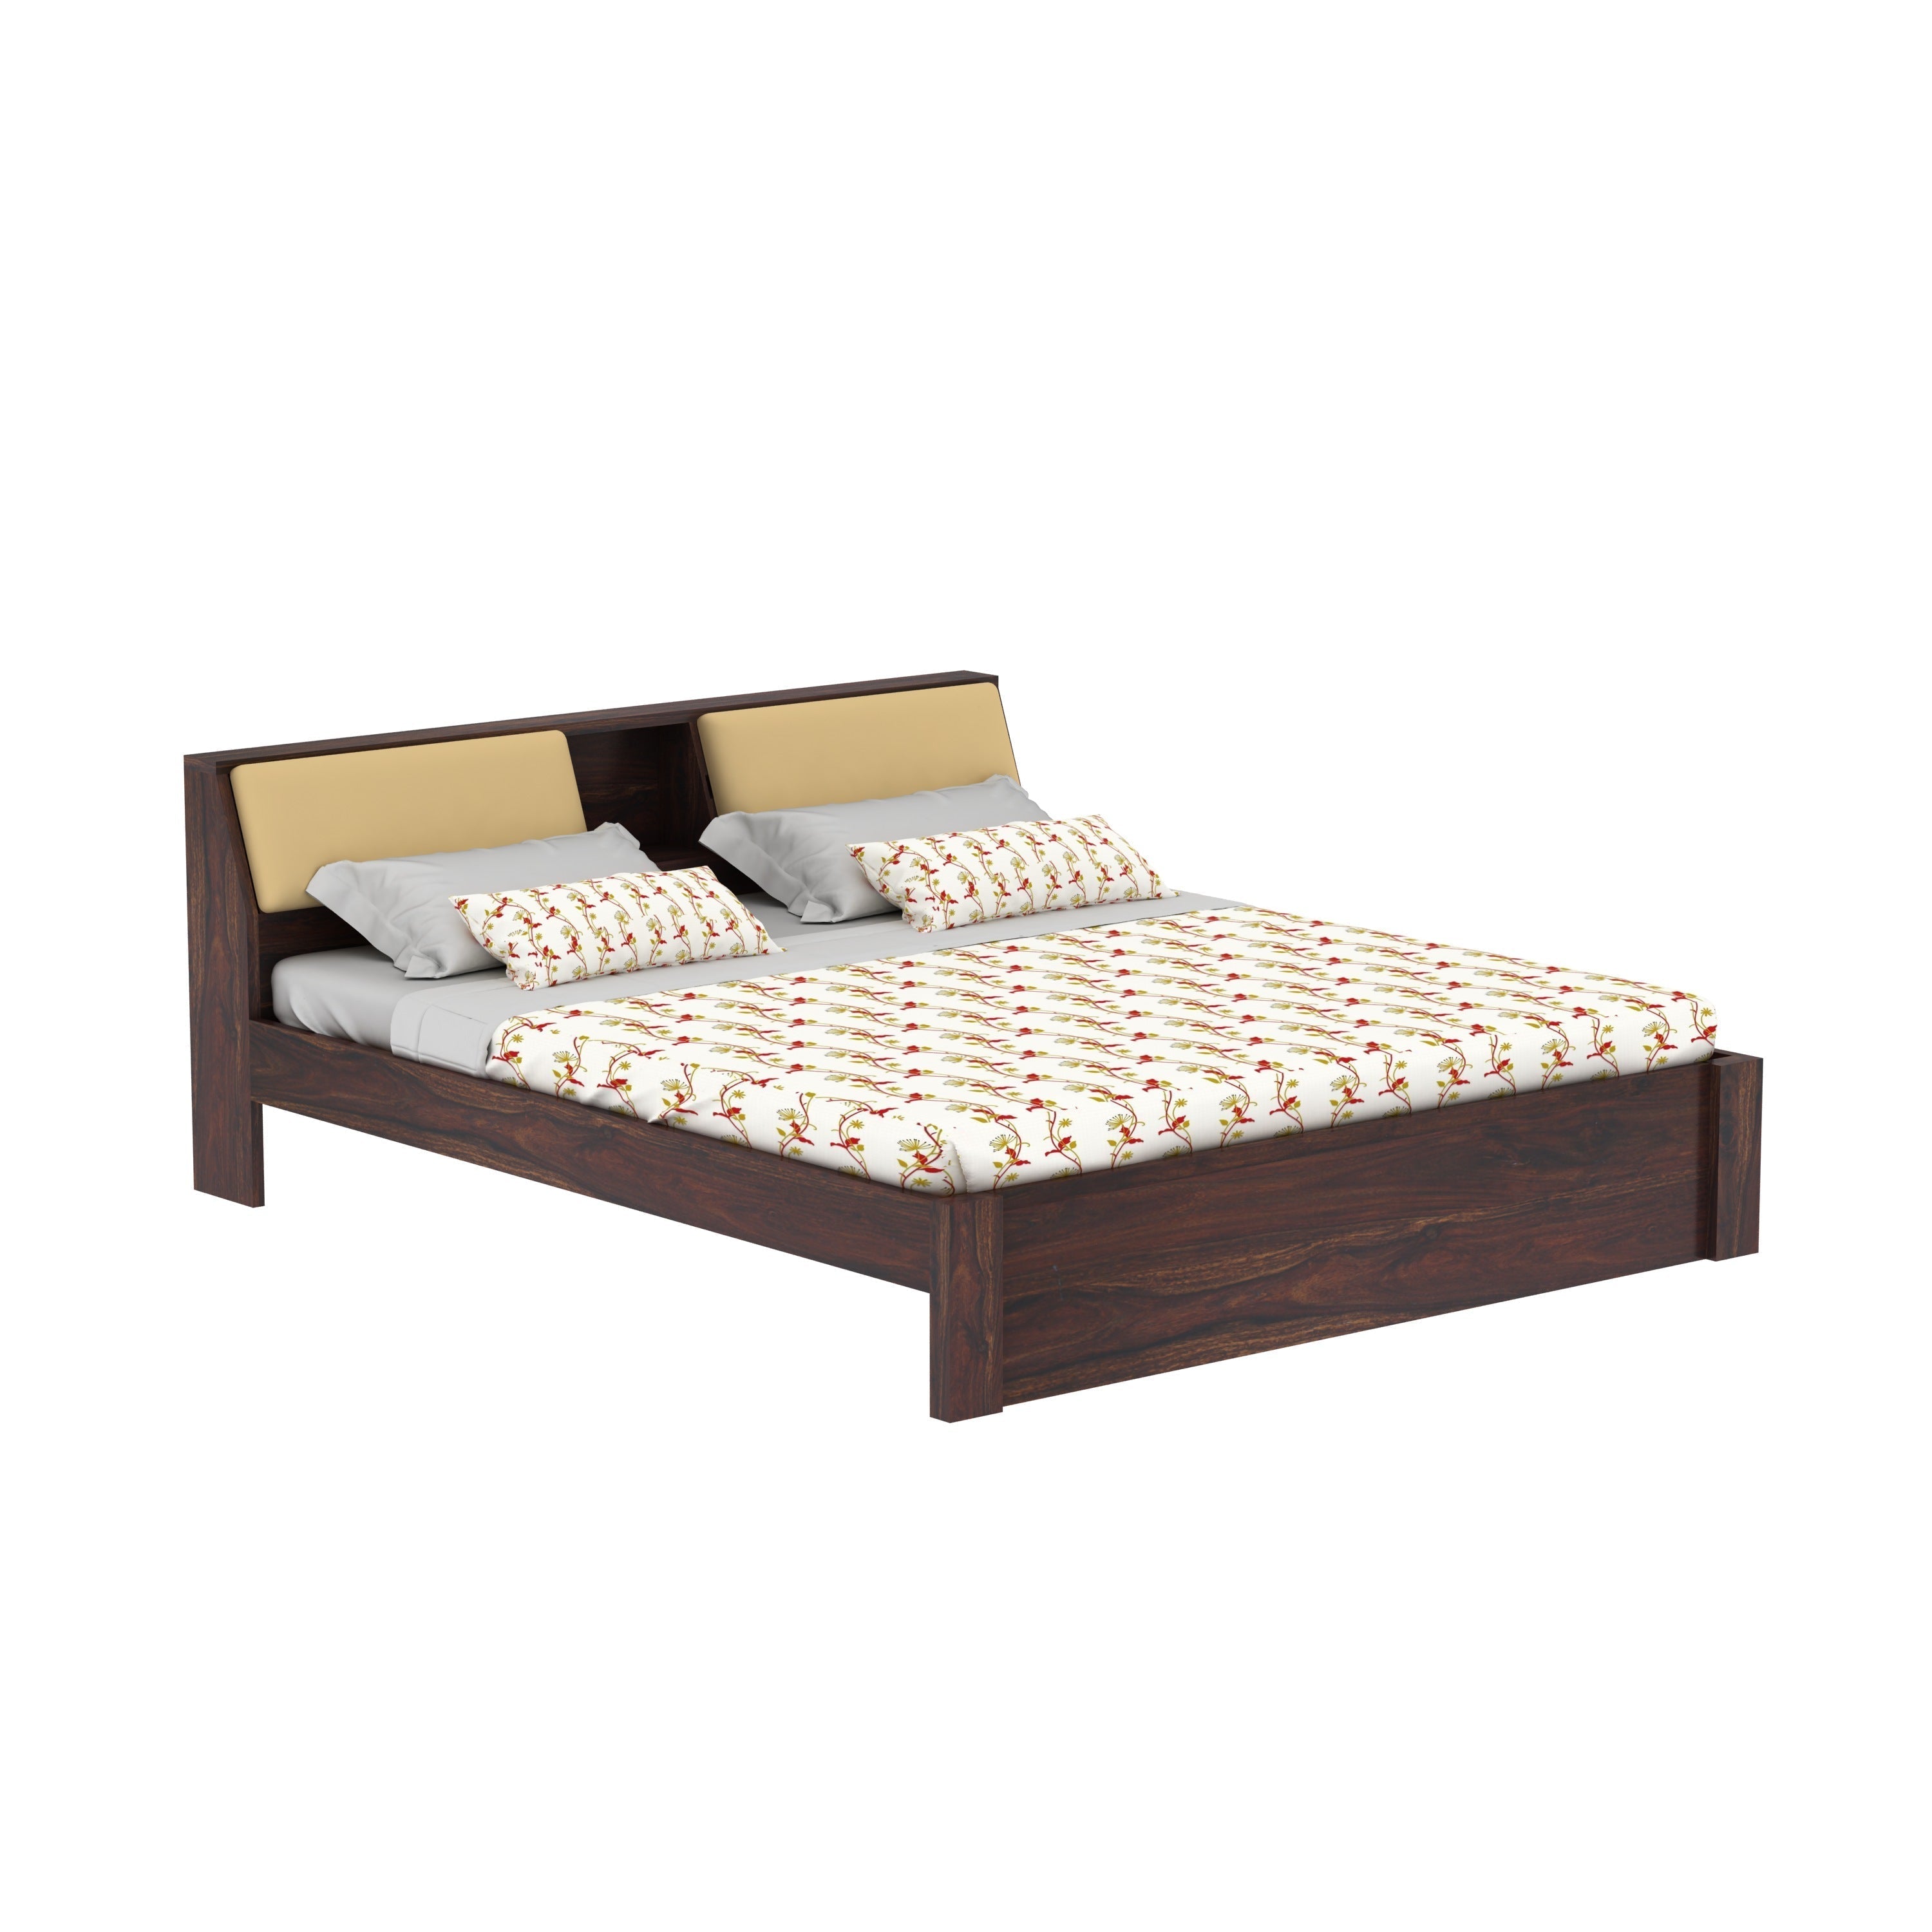 Rubikk Solid Sheesham Wood Bed Without Storage (Queen Size, Walnut Finish)